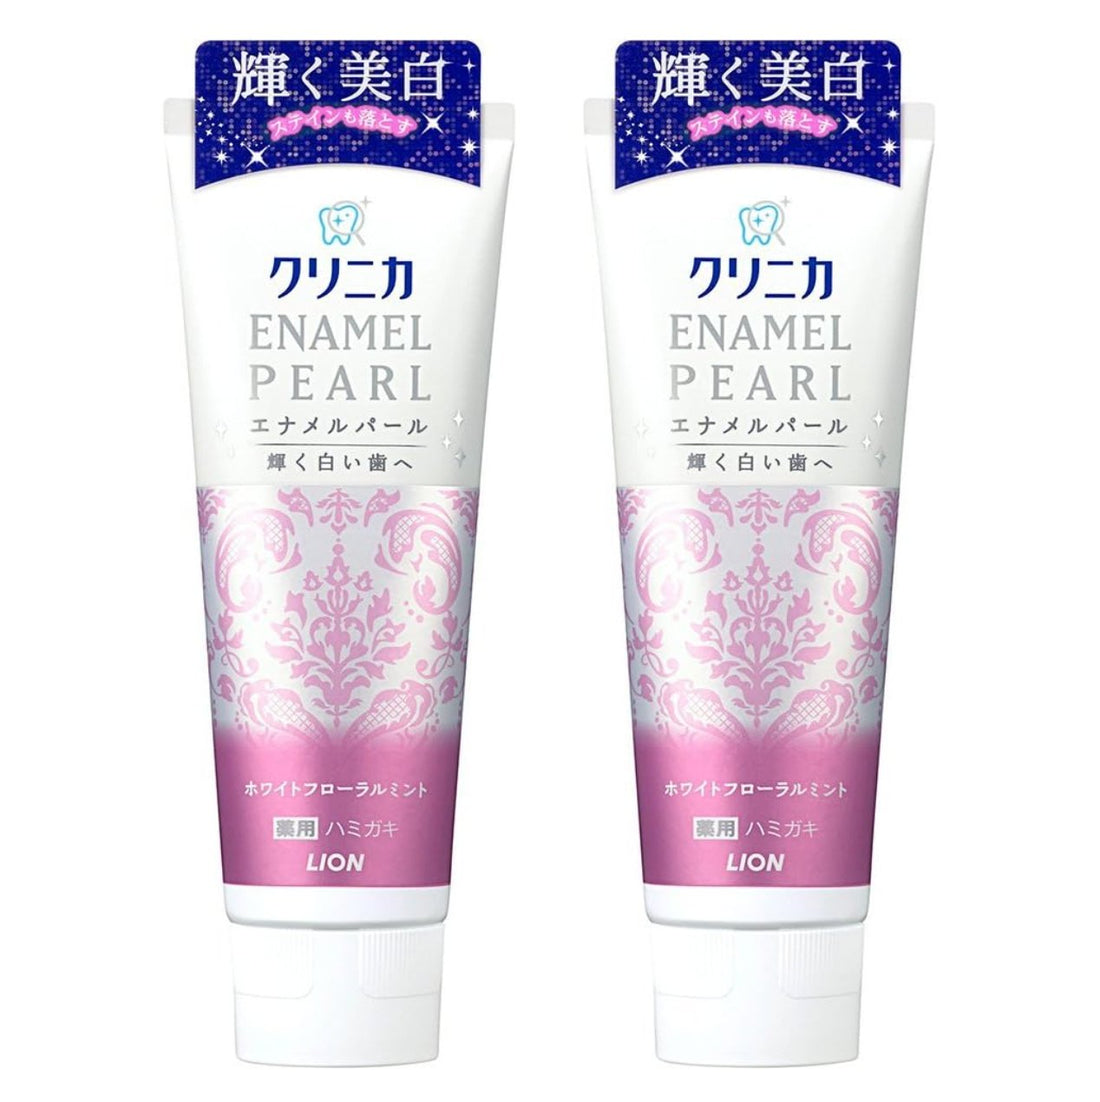 Clinica [Quasi-drug] Enamel Pearl Toothpaste White Floral Mint 130g x 2 - NihonMura